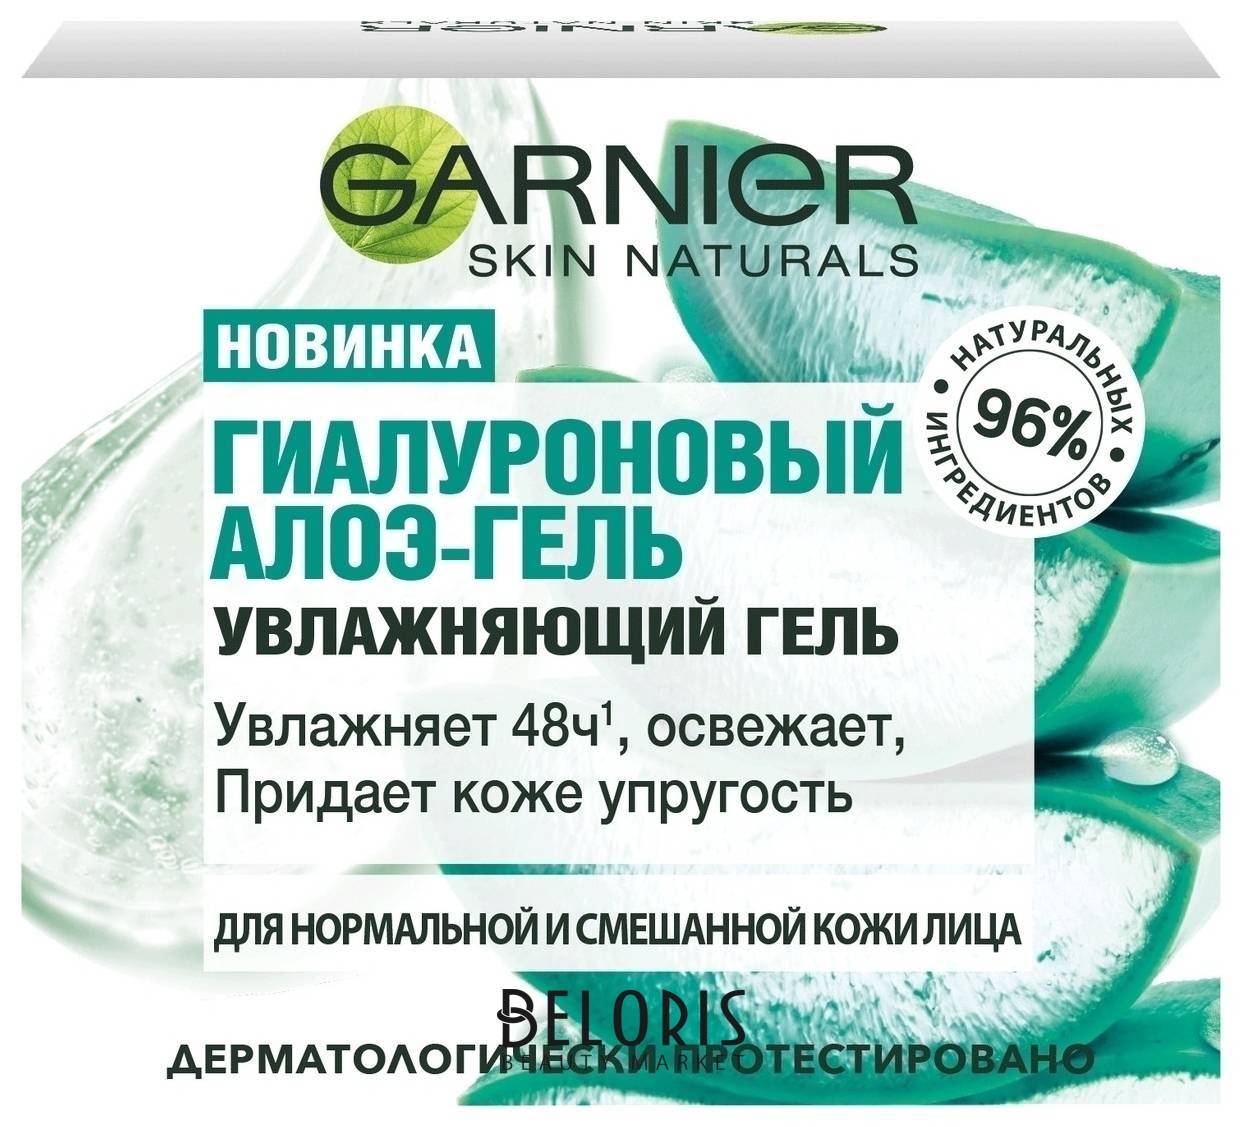 Гиалуроновый алоэ-гель увлажняющий для лица Garnier Skin naturals